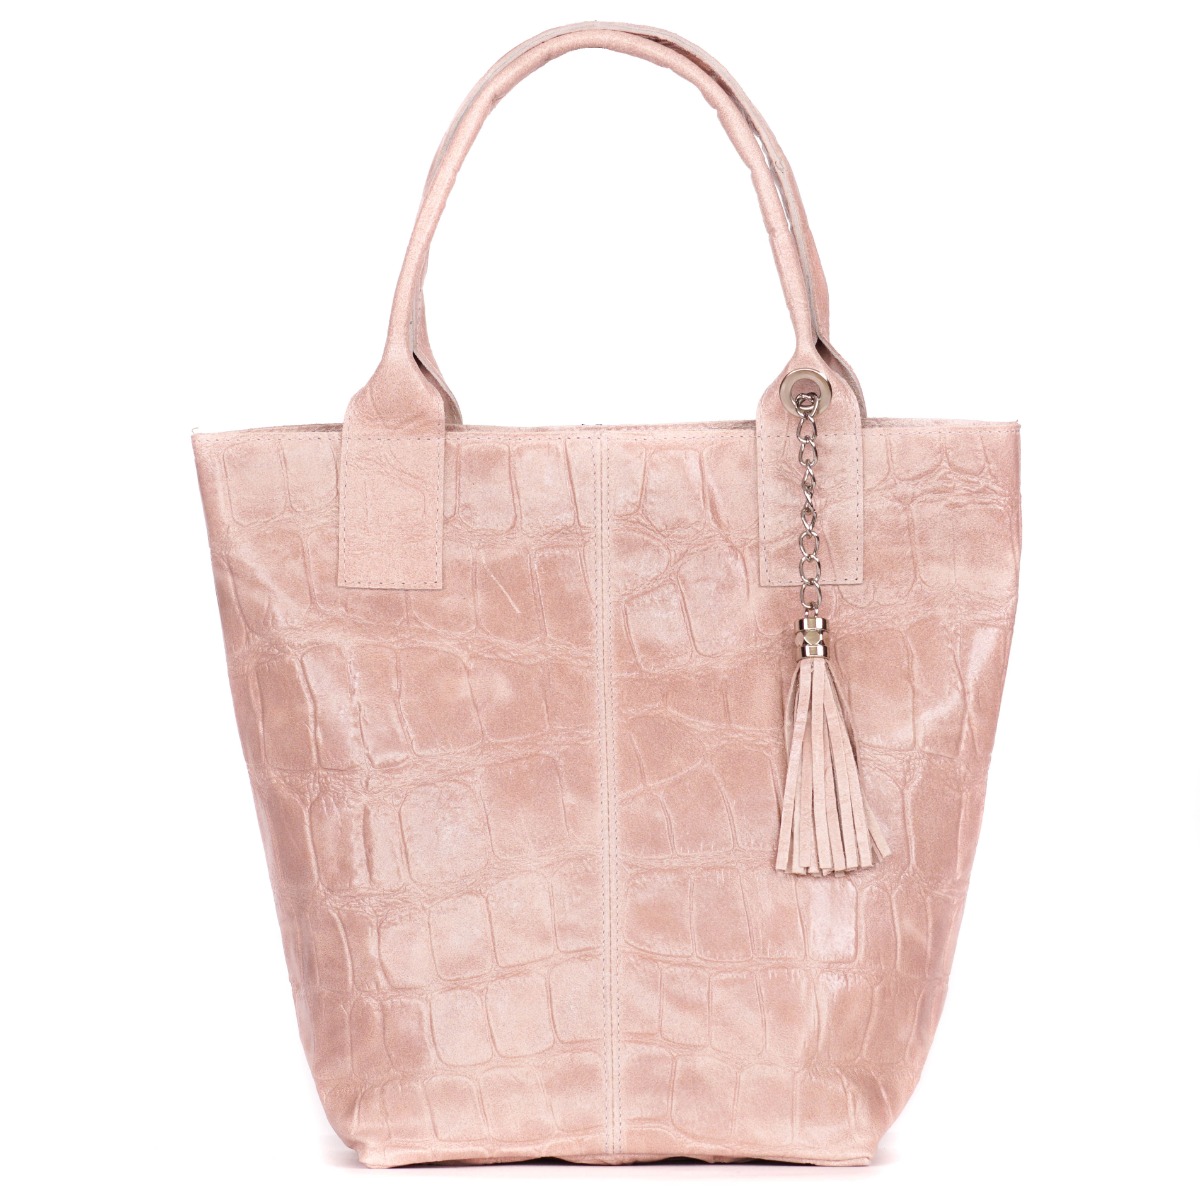 Genuine leather tote bag pink 